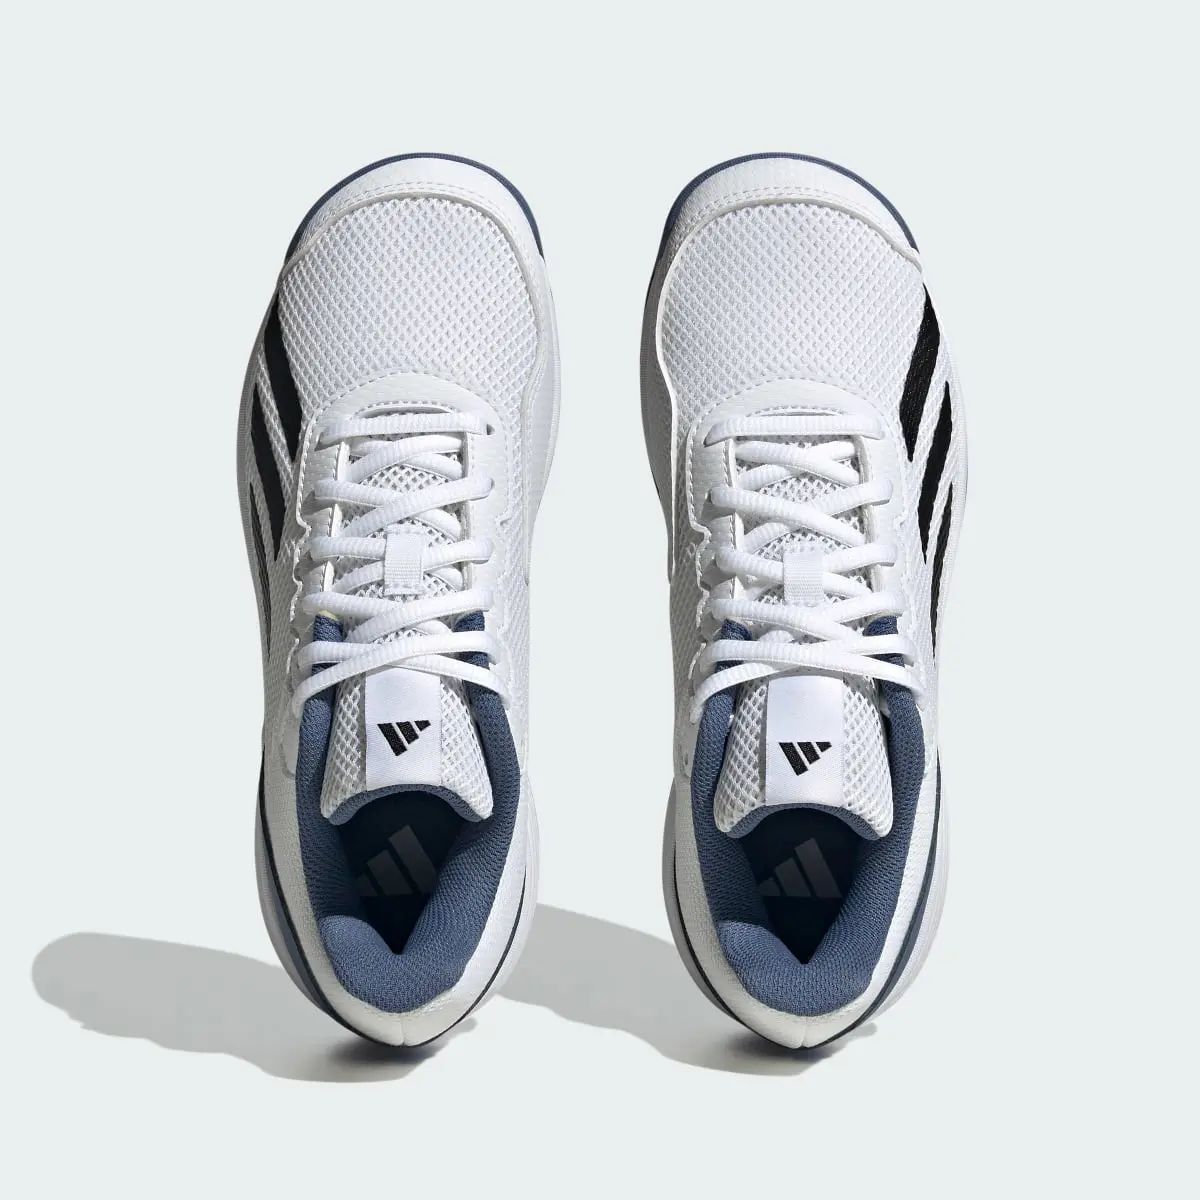 Adidas Courtflash Tennis Shoes. 3